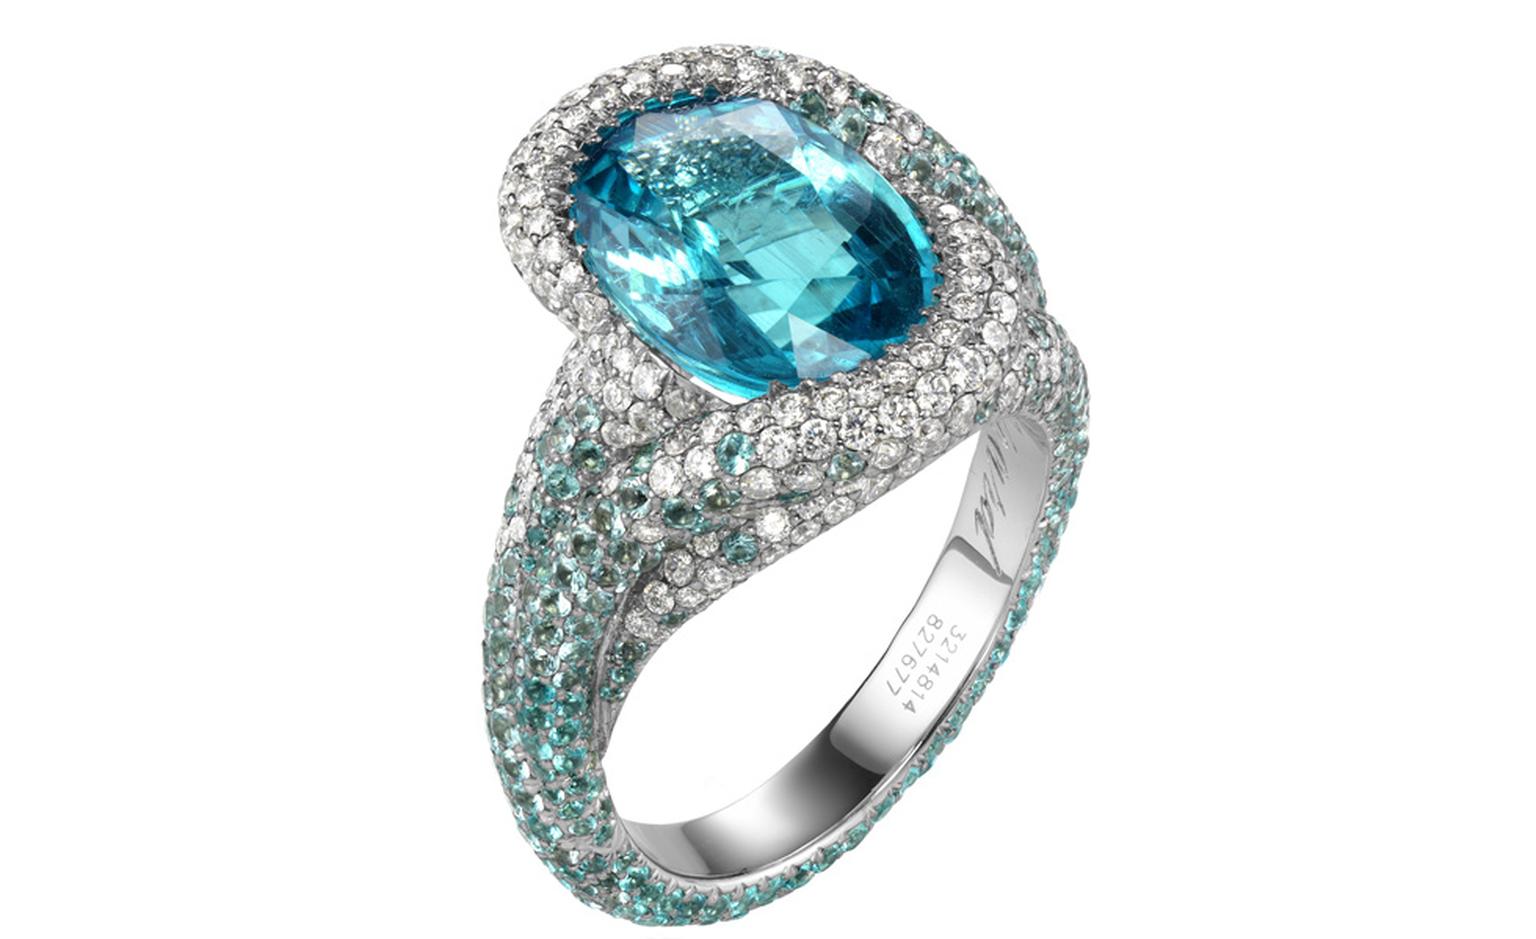 Chopard Paraiba tourmaline, tourmaline and diamond ring POA